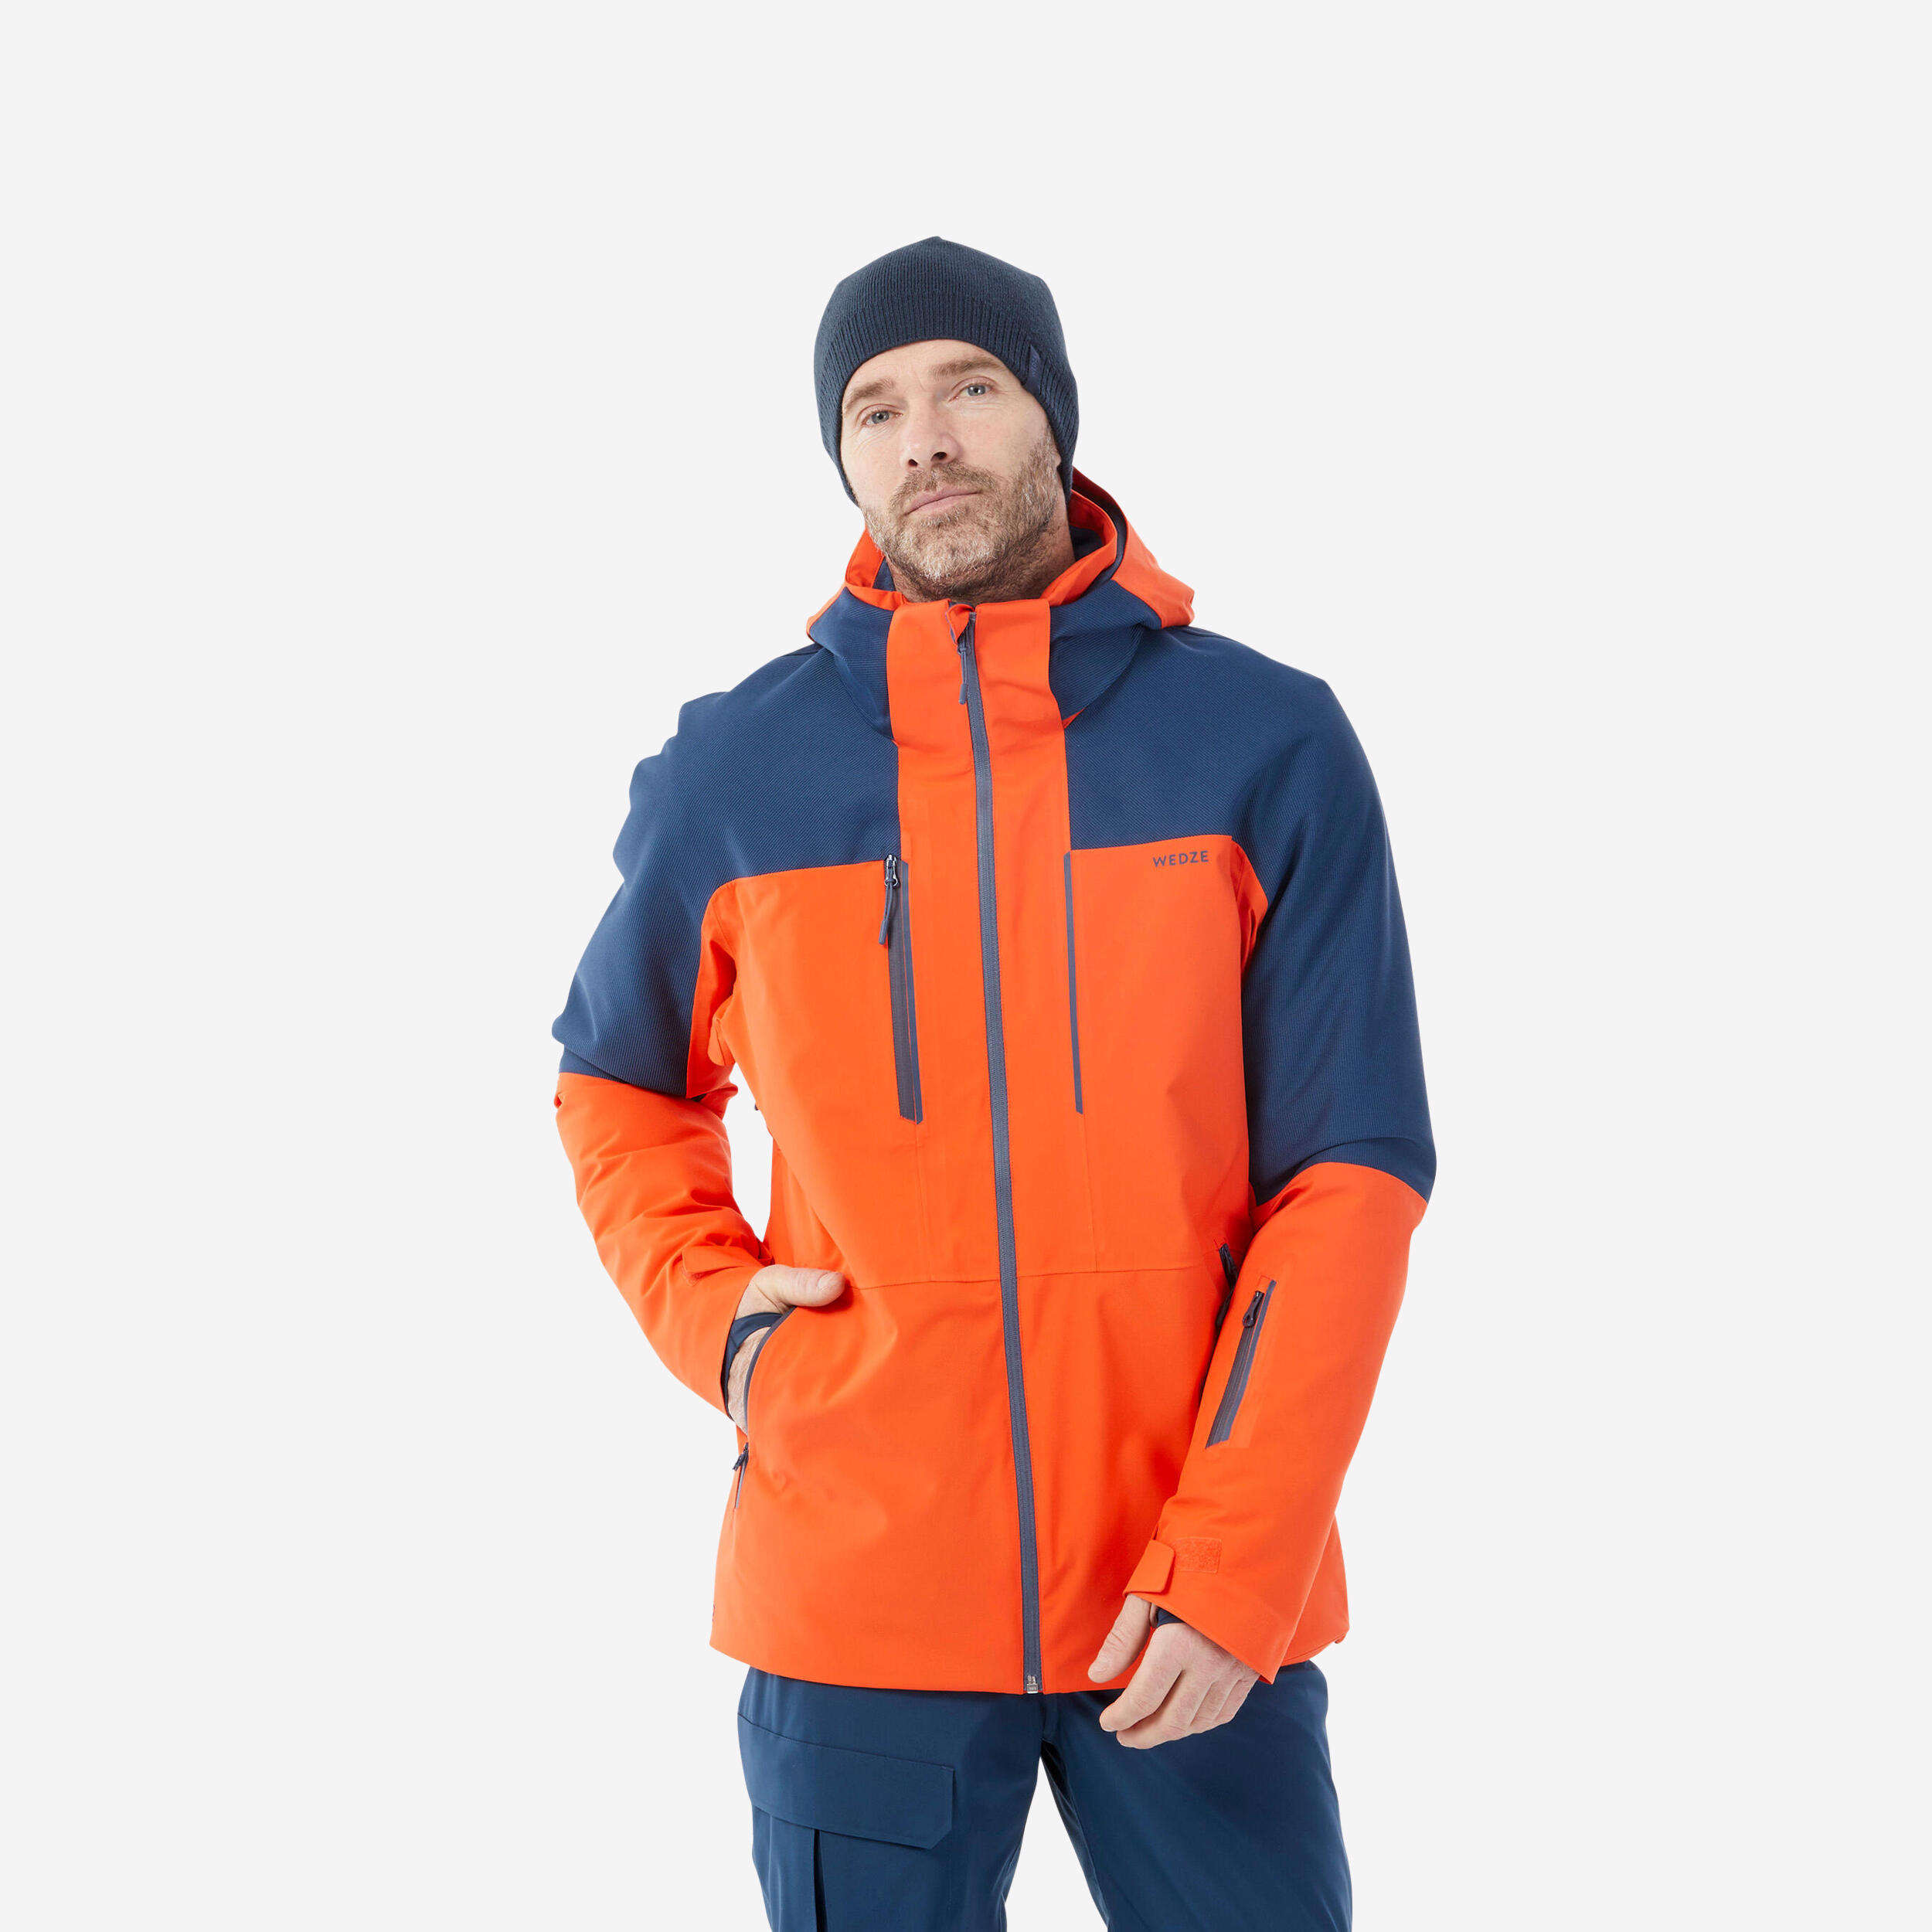 WEDZE Men’s Ski Jacket - 500 SPORT - Orange/Blue